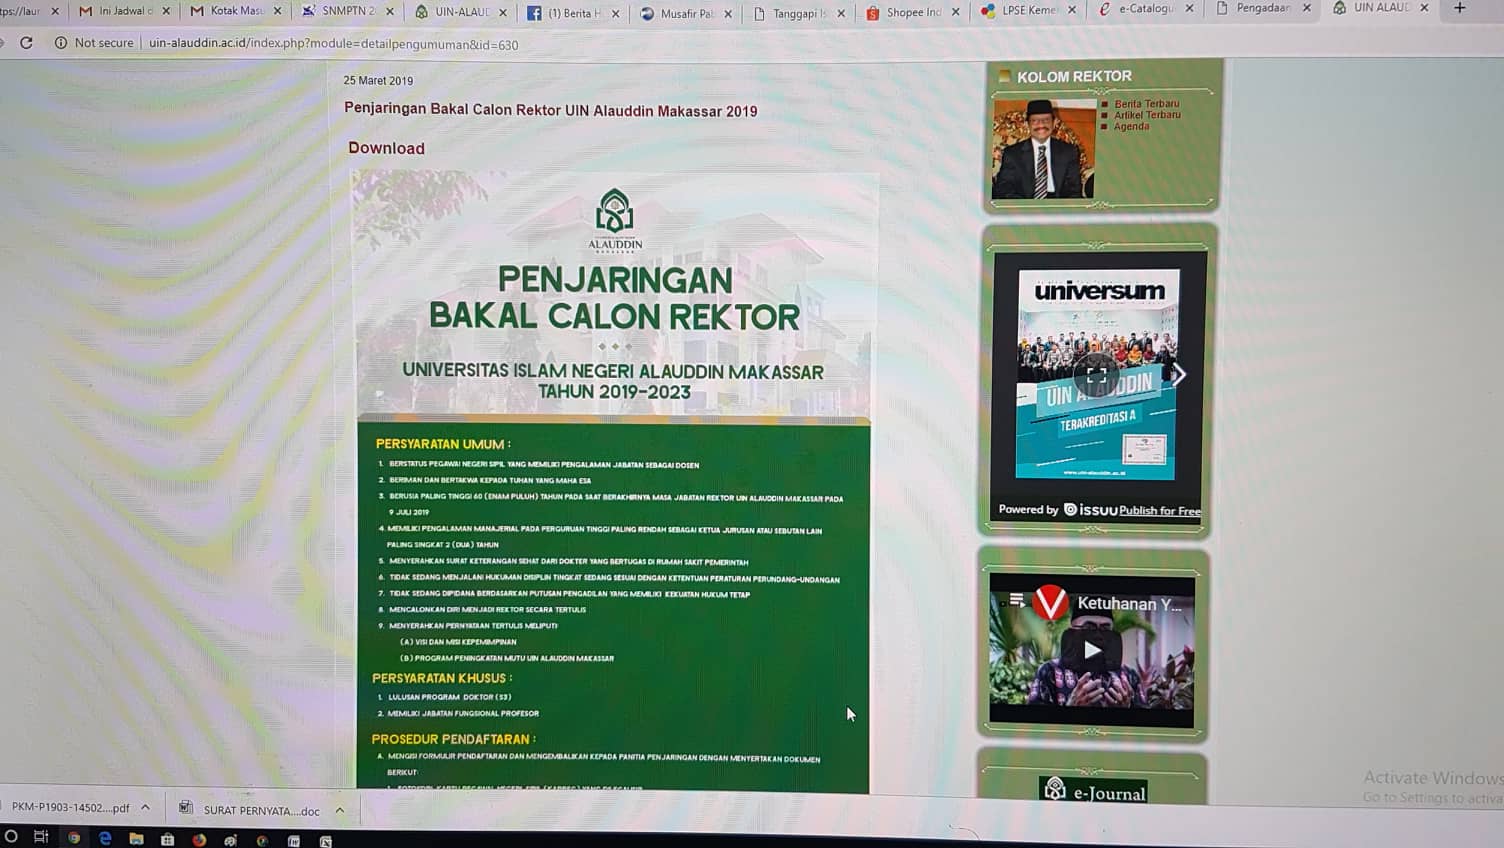 Gambar Ini Jadwal dan Persyaratan Bakal Calon Rektor UIN Alauddin 2019